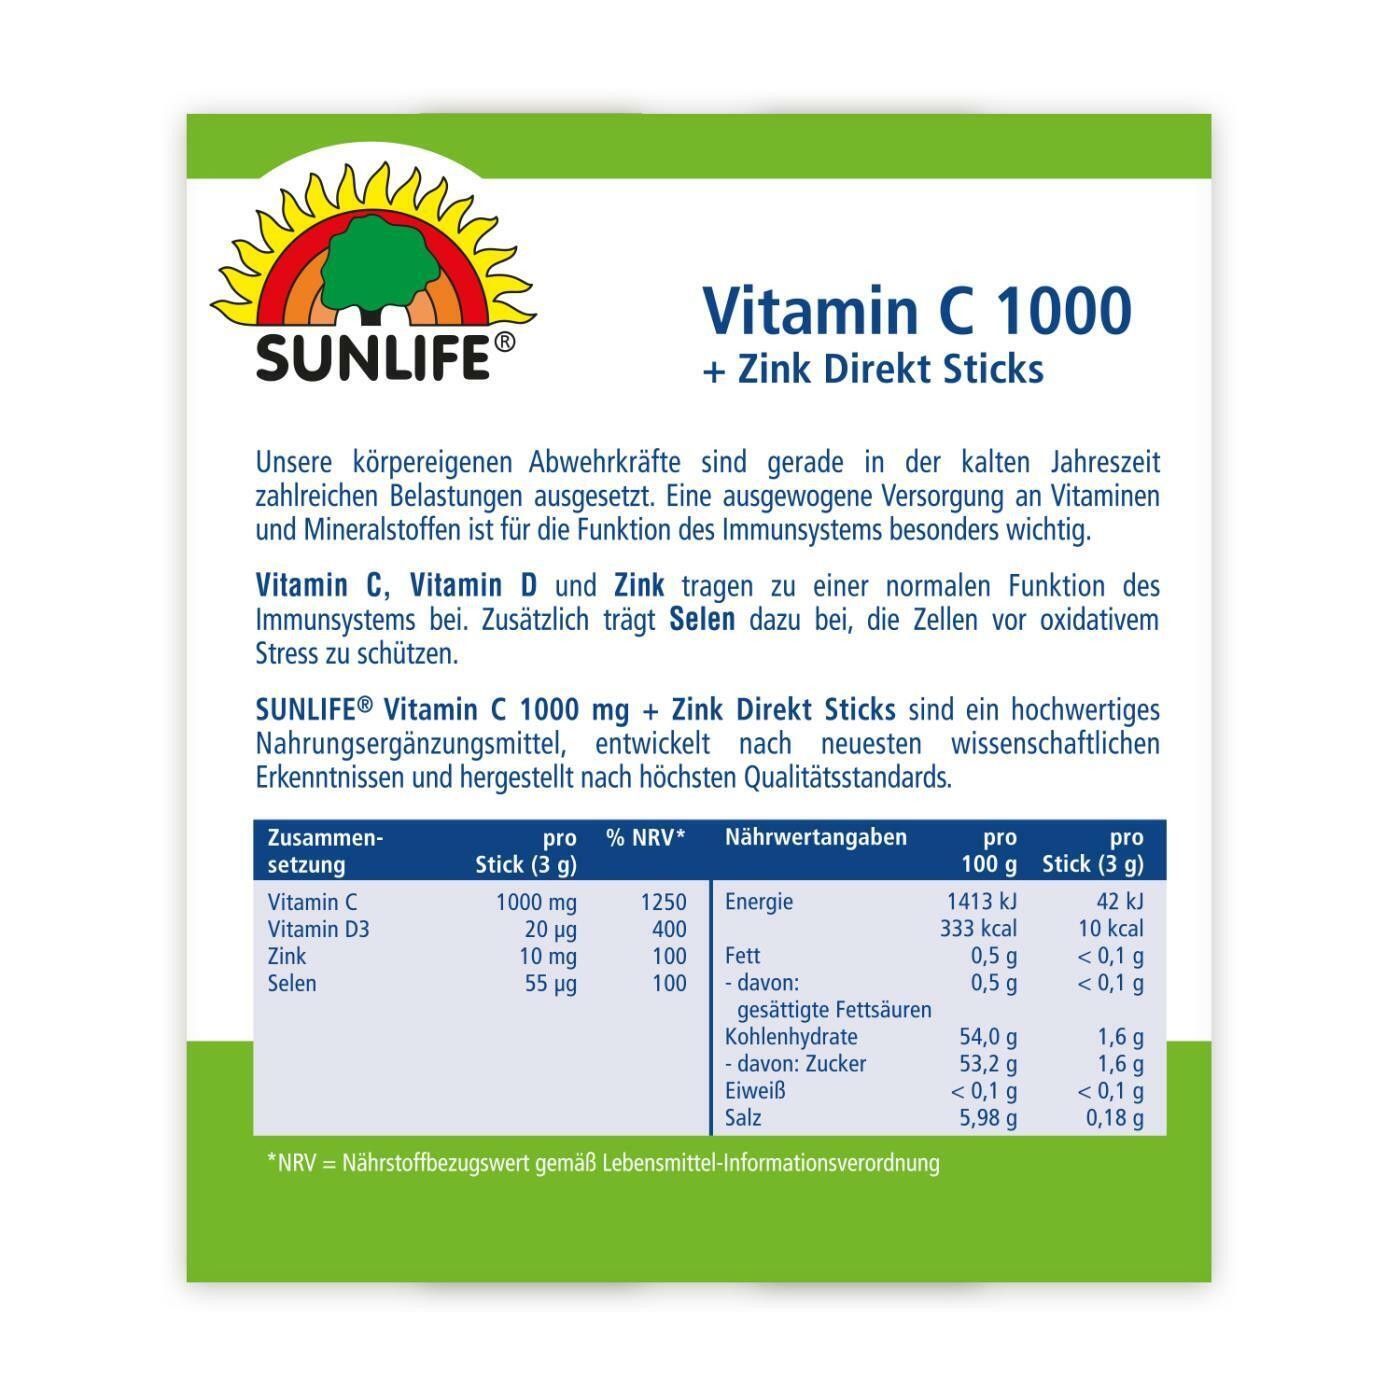 Sunlife Vitamin C 1000 + Zink Direkt Sticks